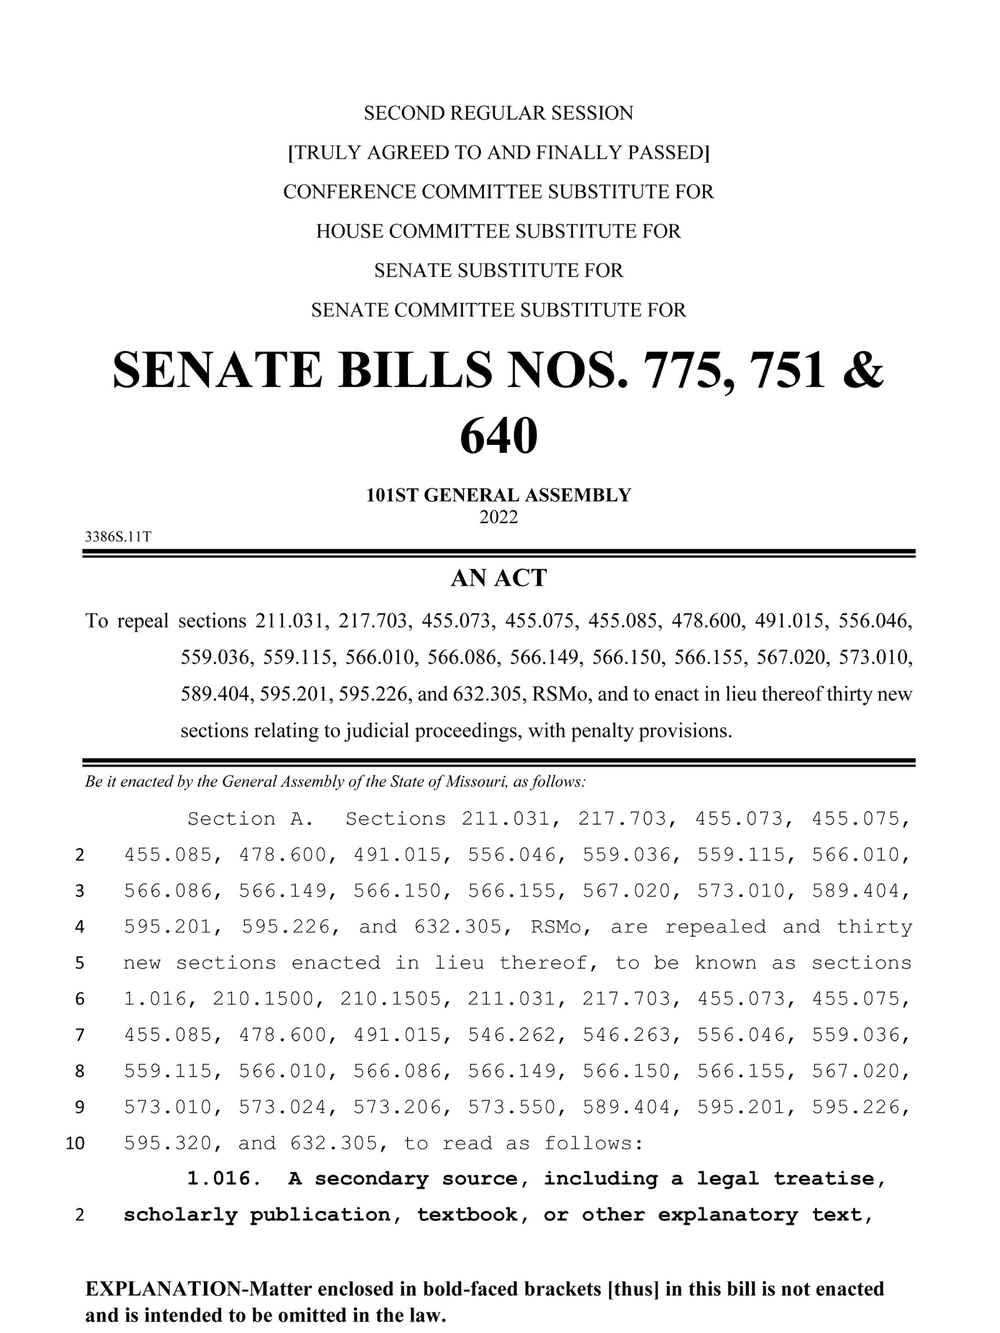 Senate Bill 775.png